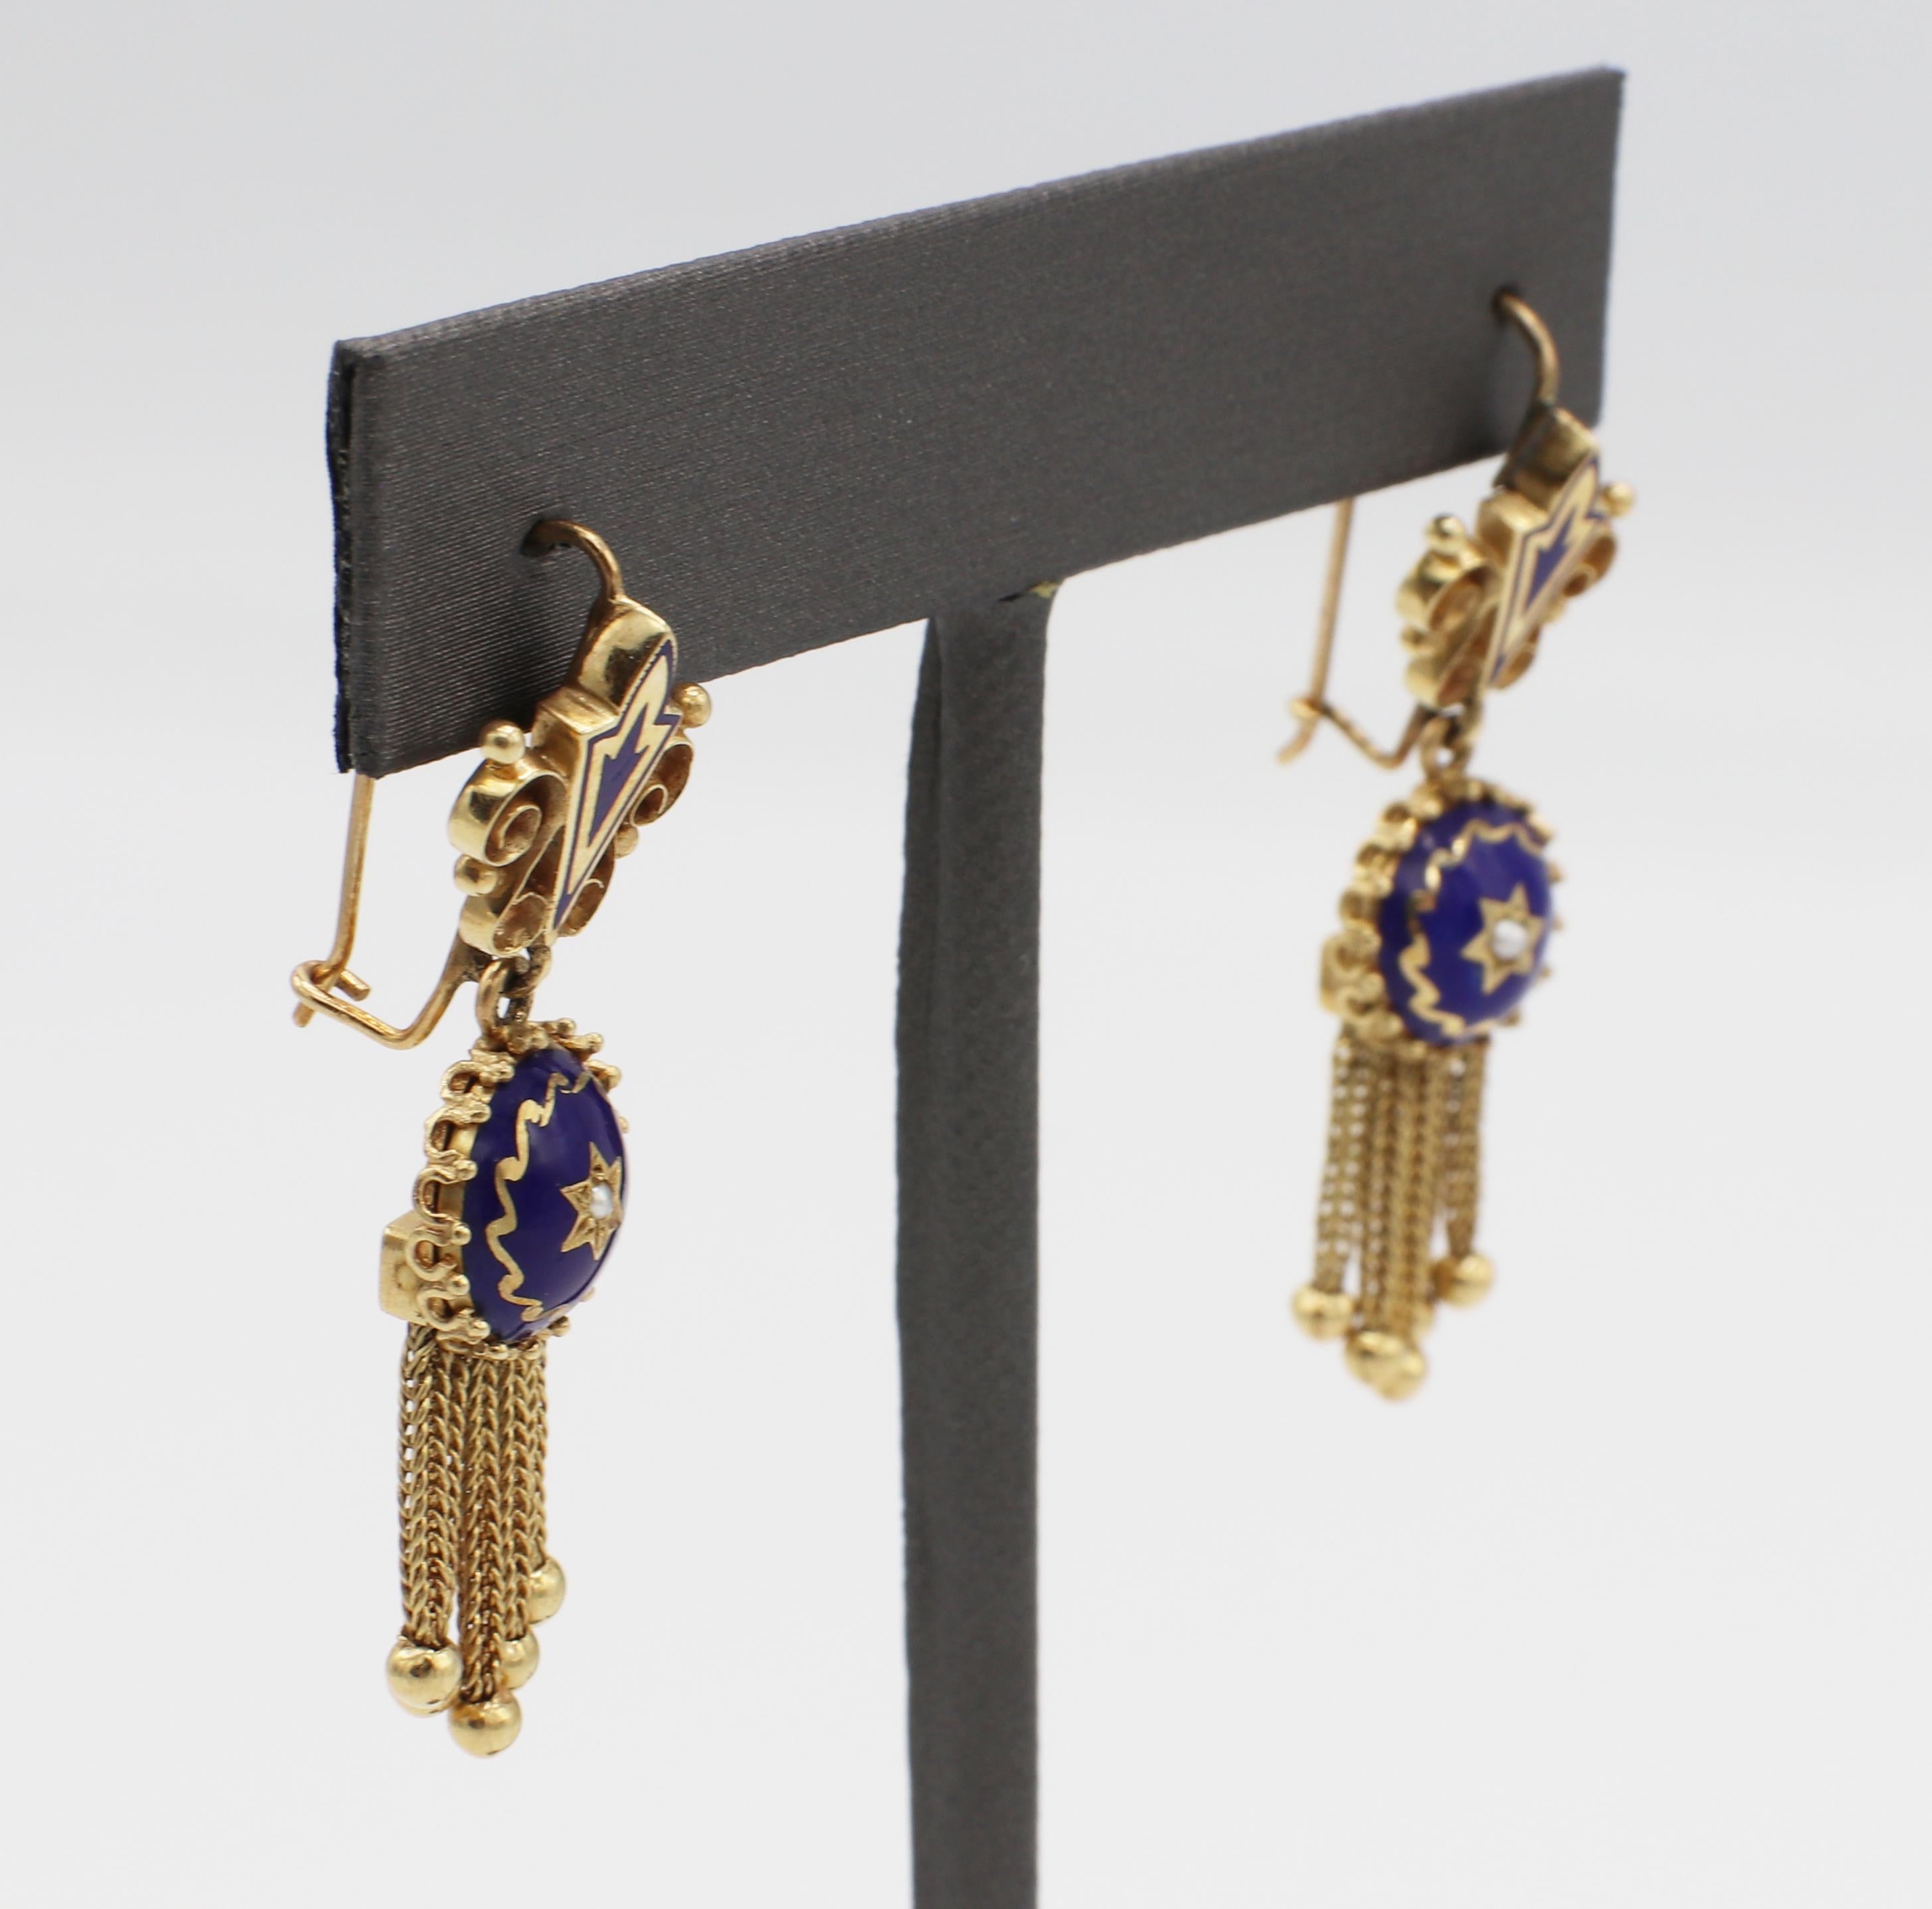 Antique 14 Karat Gold Blue Enamel & Pearl Dangle Fringe Drop Earrings 
Metal: 14k yellow gold
Weight: 7.67 grams
Enamel: Blue
Pearls: Natural seed pearls, 1.4MM
Length: 40MM
Width: 11MM
